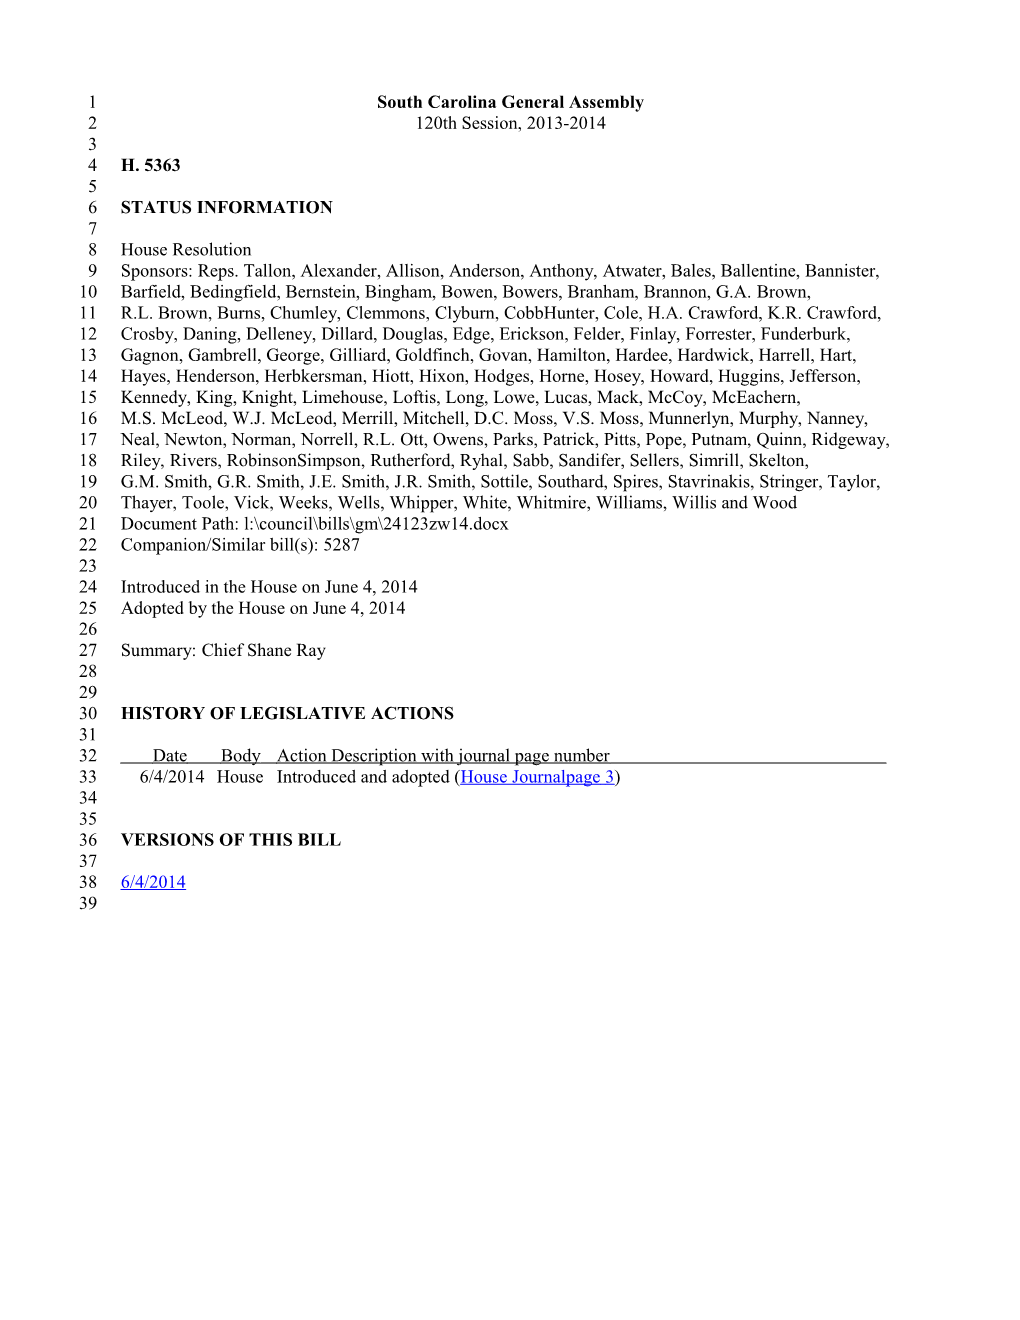 2013-2014 Bill 5363: Chief Shane Ray - South Carolina Legislature Online